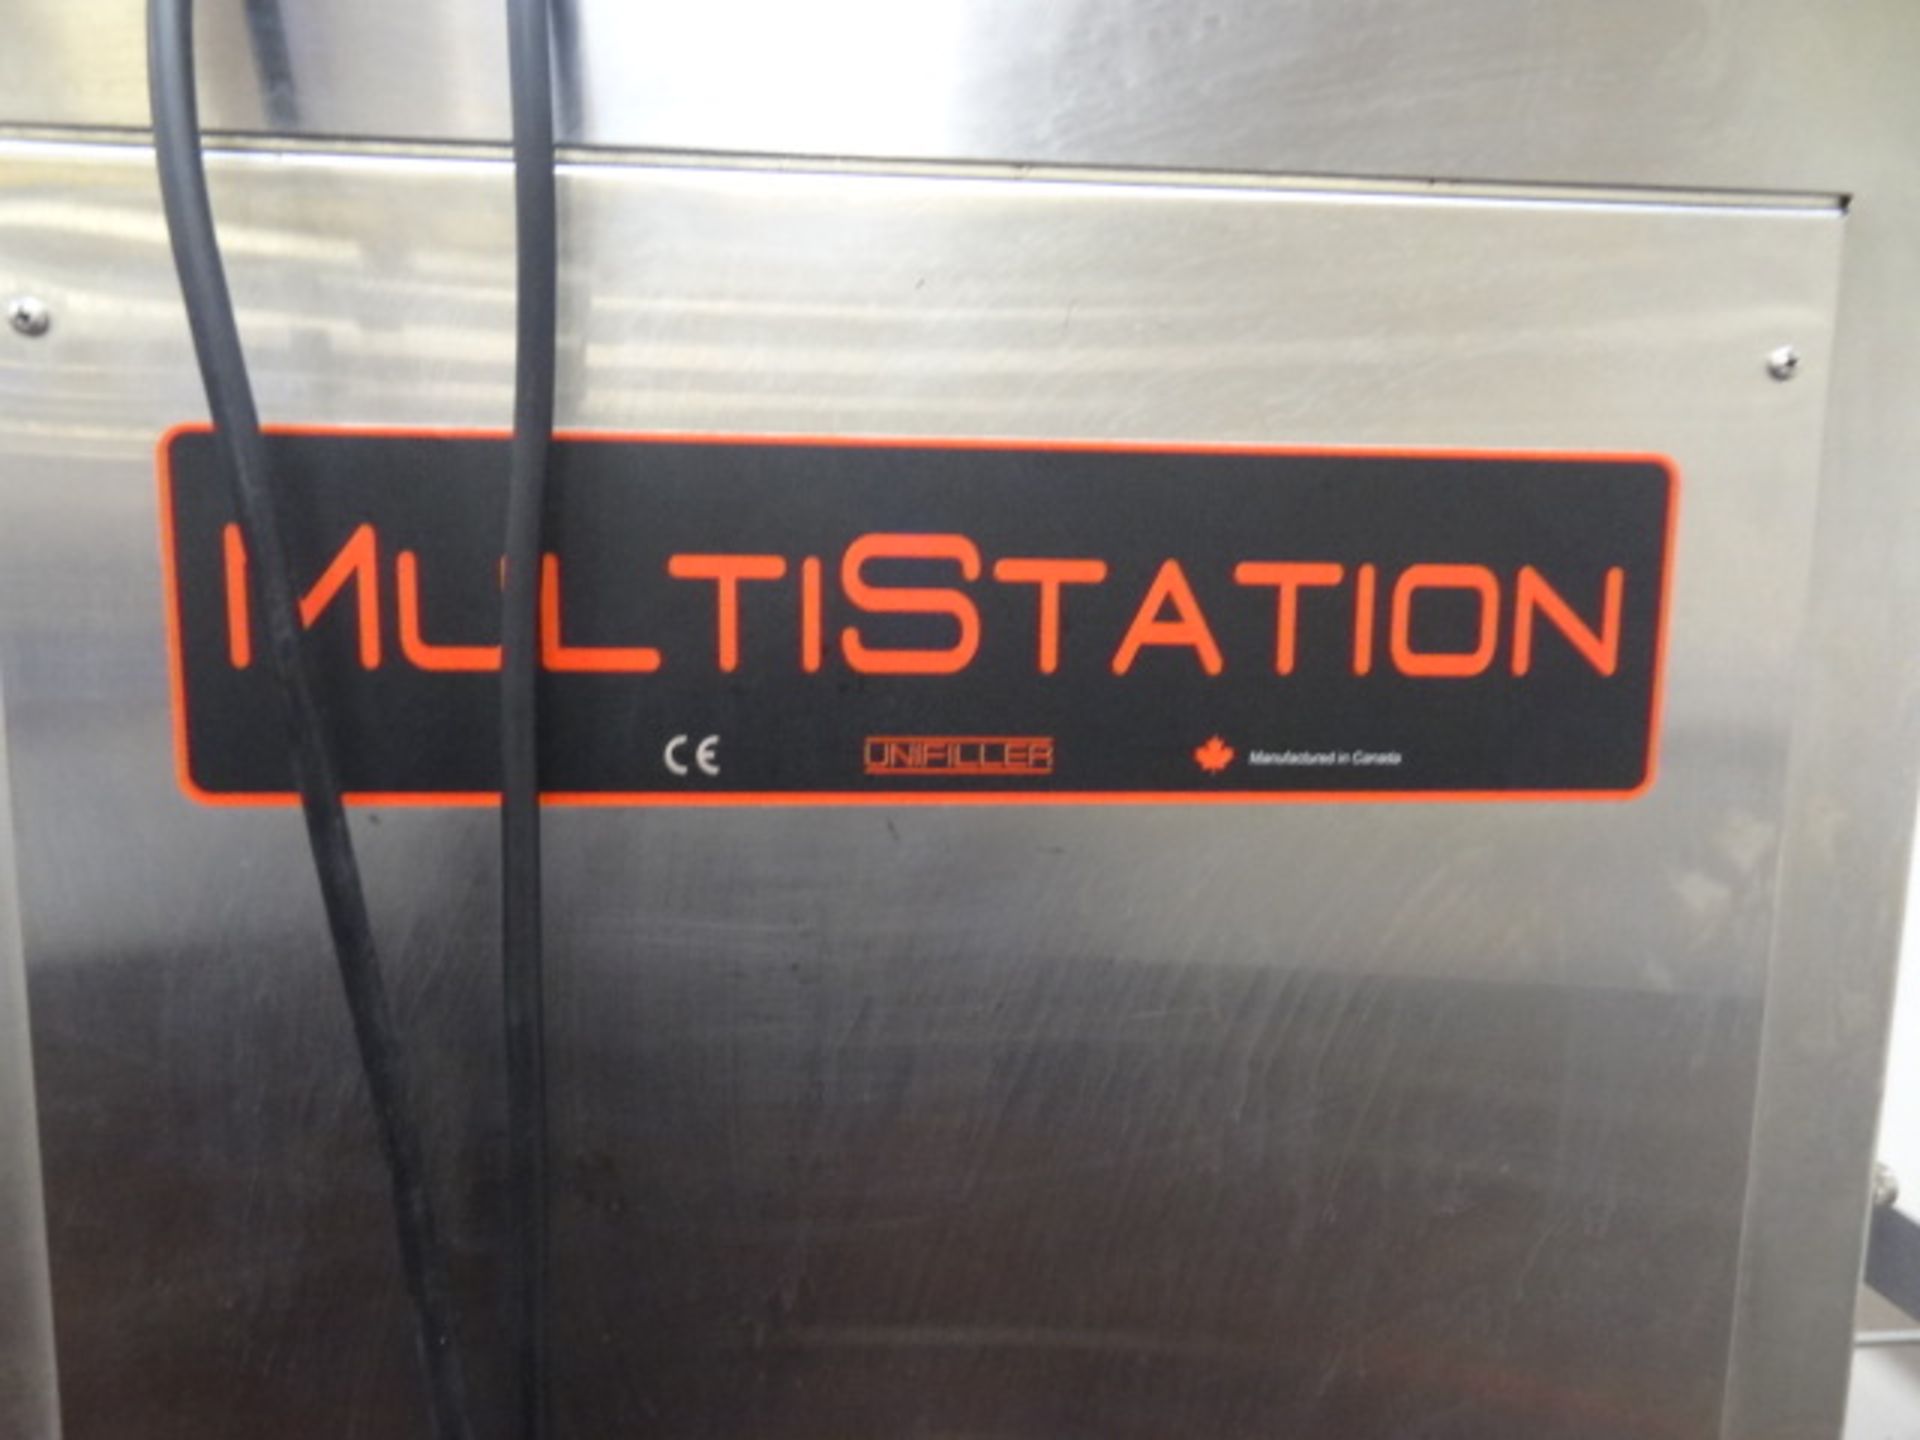 Unifiller Multistation. 6 head depositor - Image 6 of 7